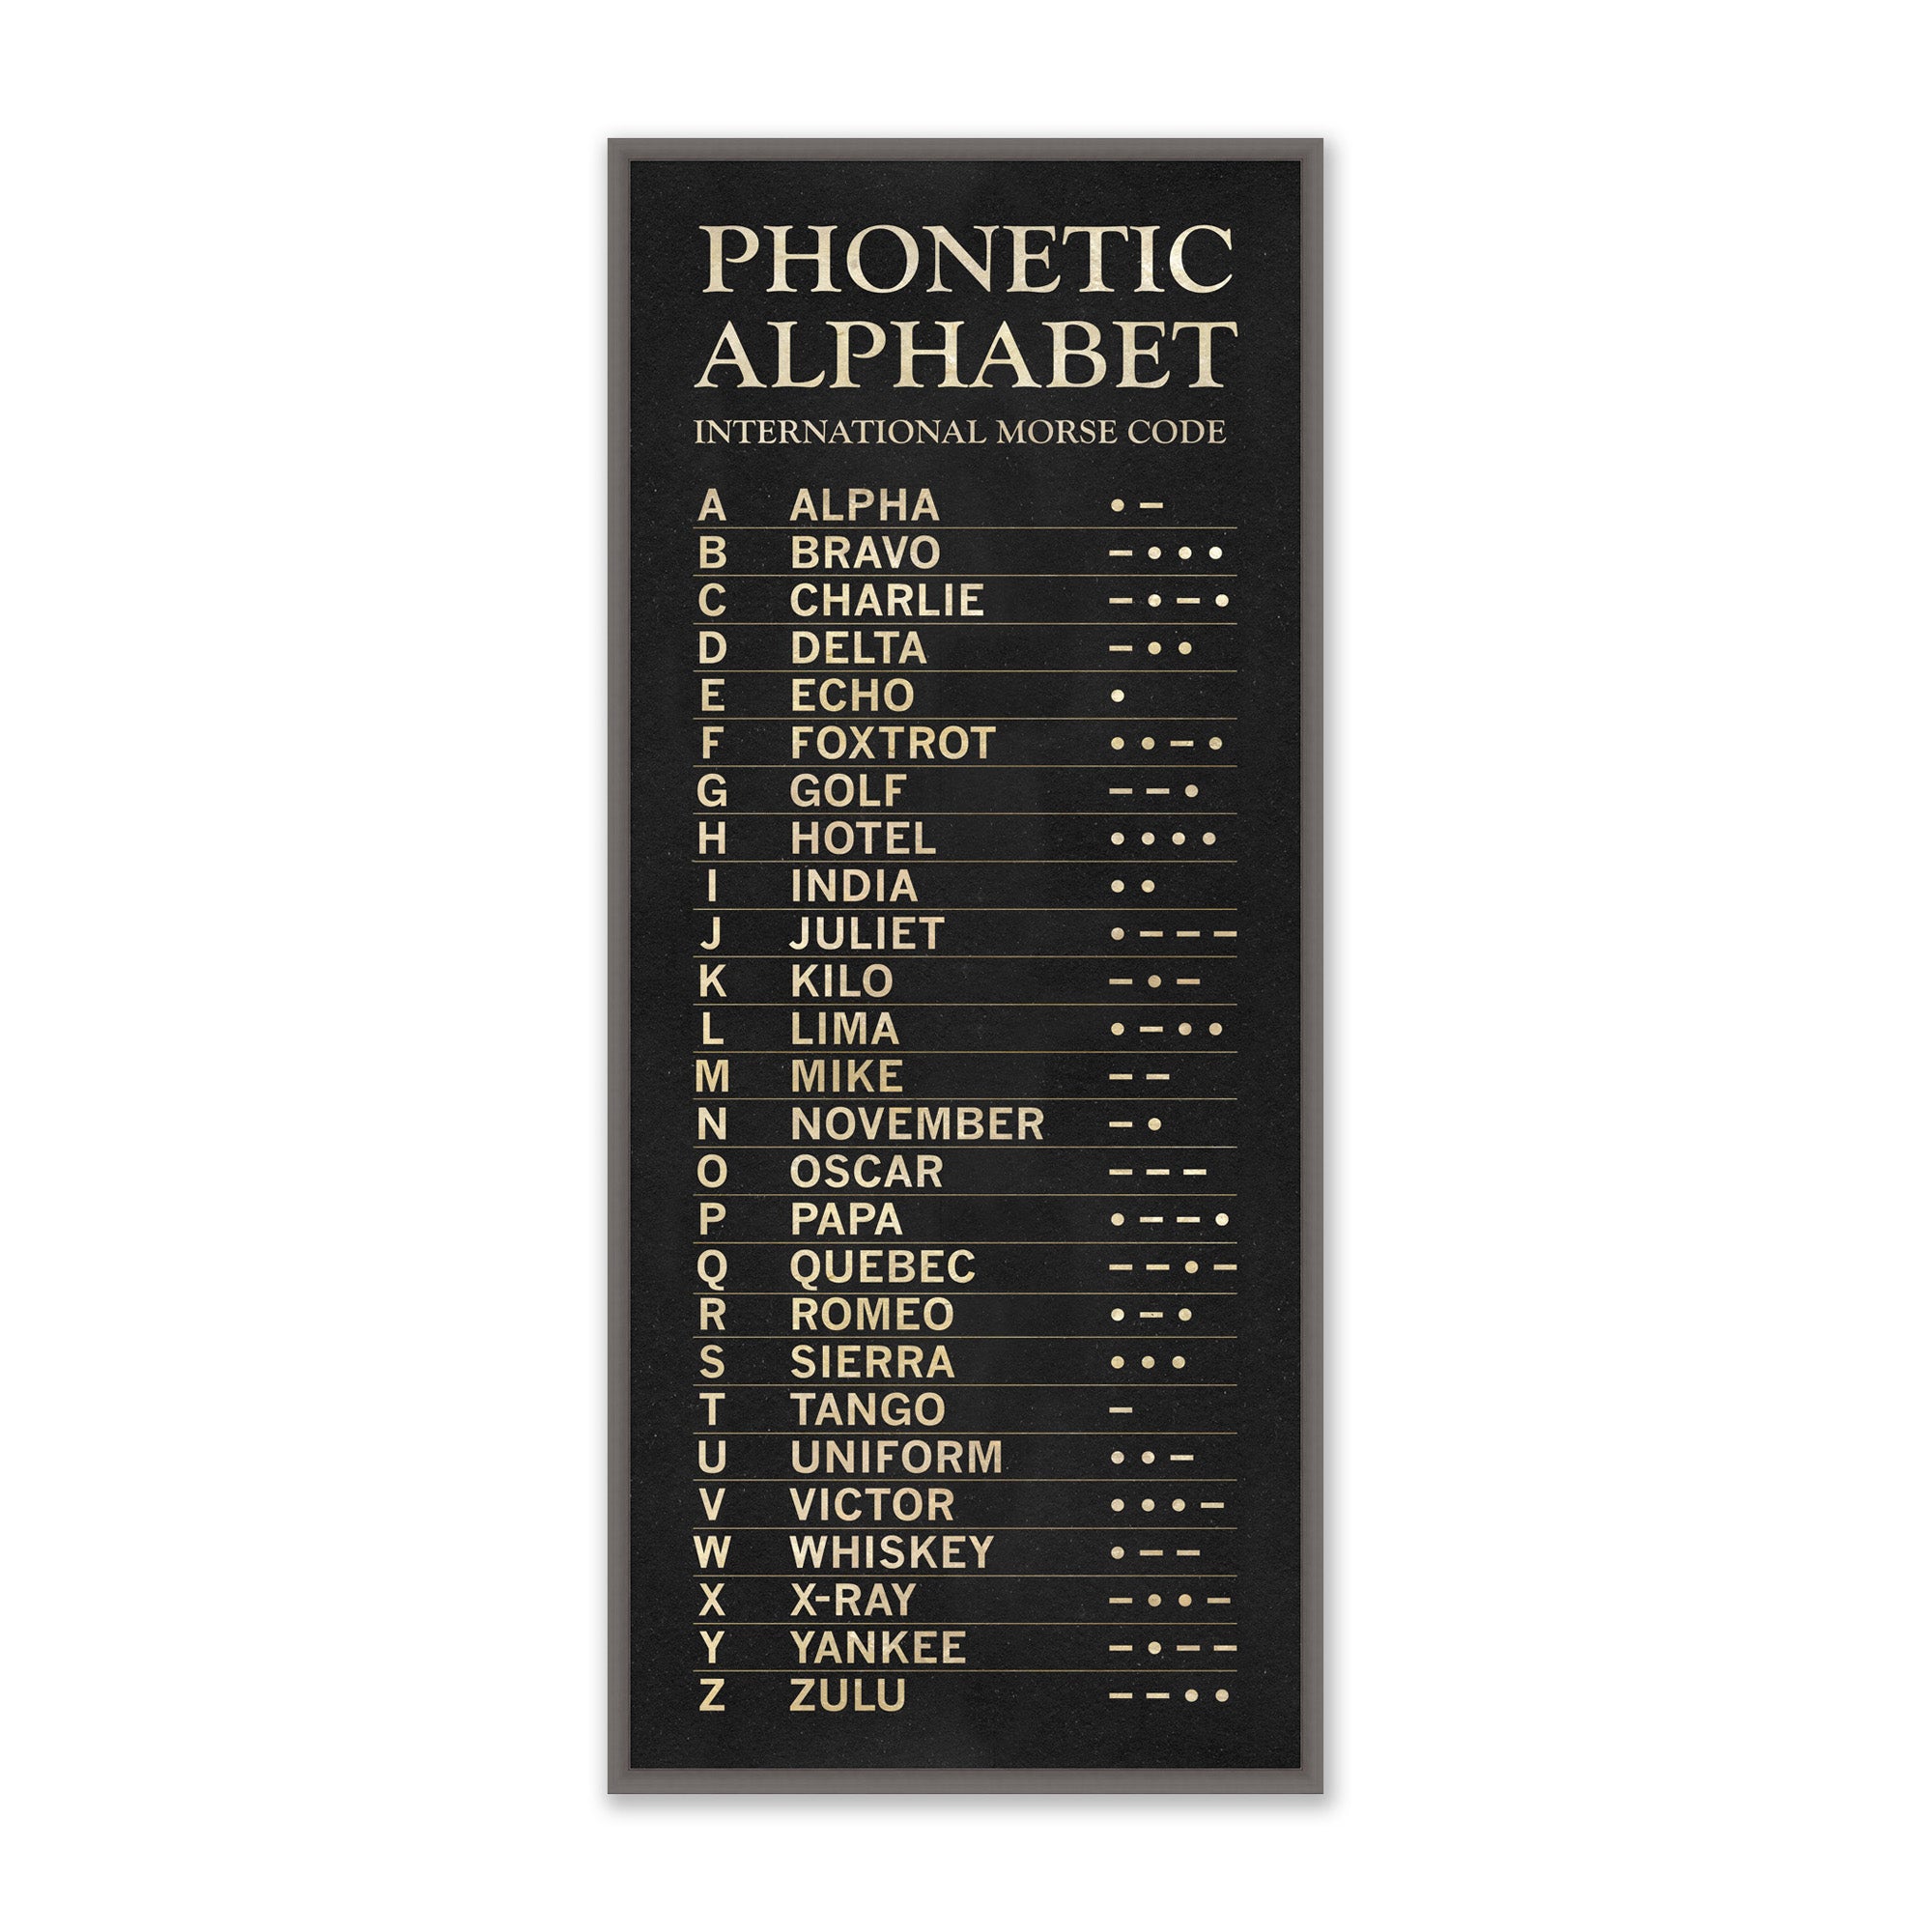 E Phonetic Alphabet : My Girlfriend S Revised Phonetic Alphabet Flying